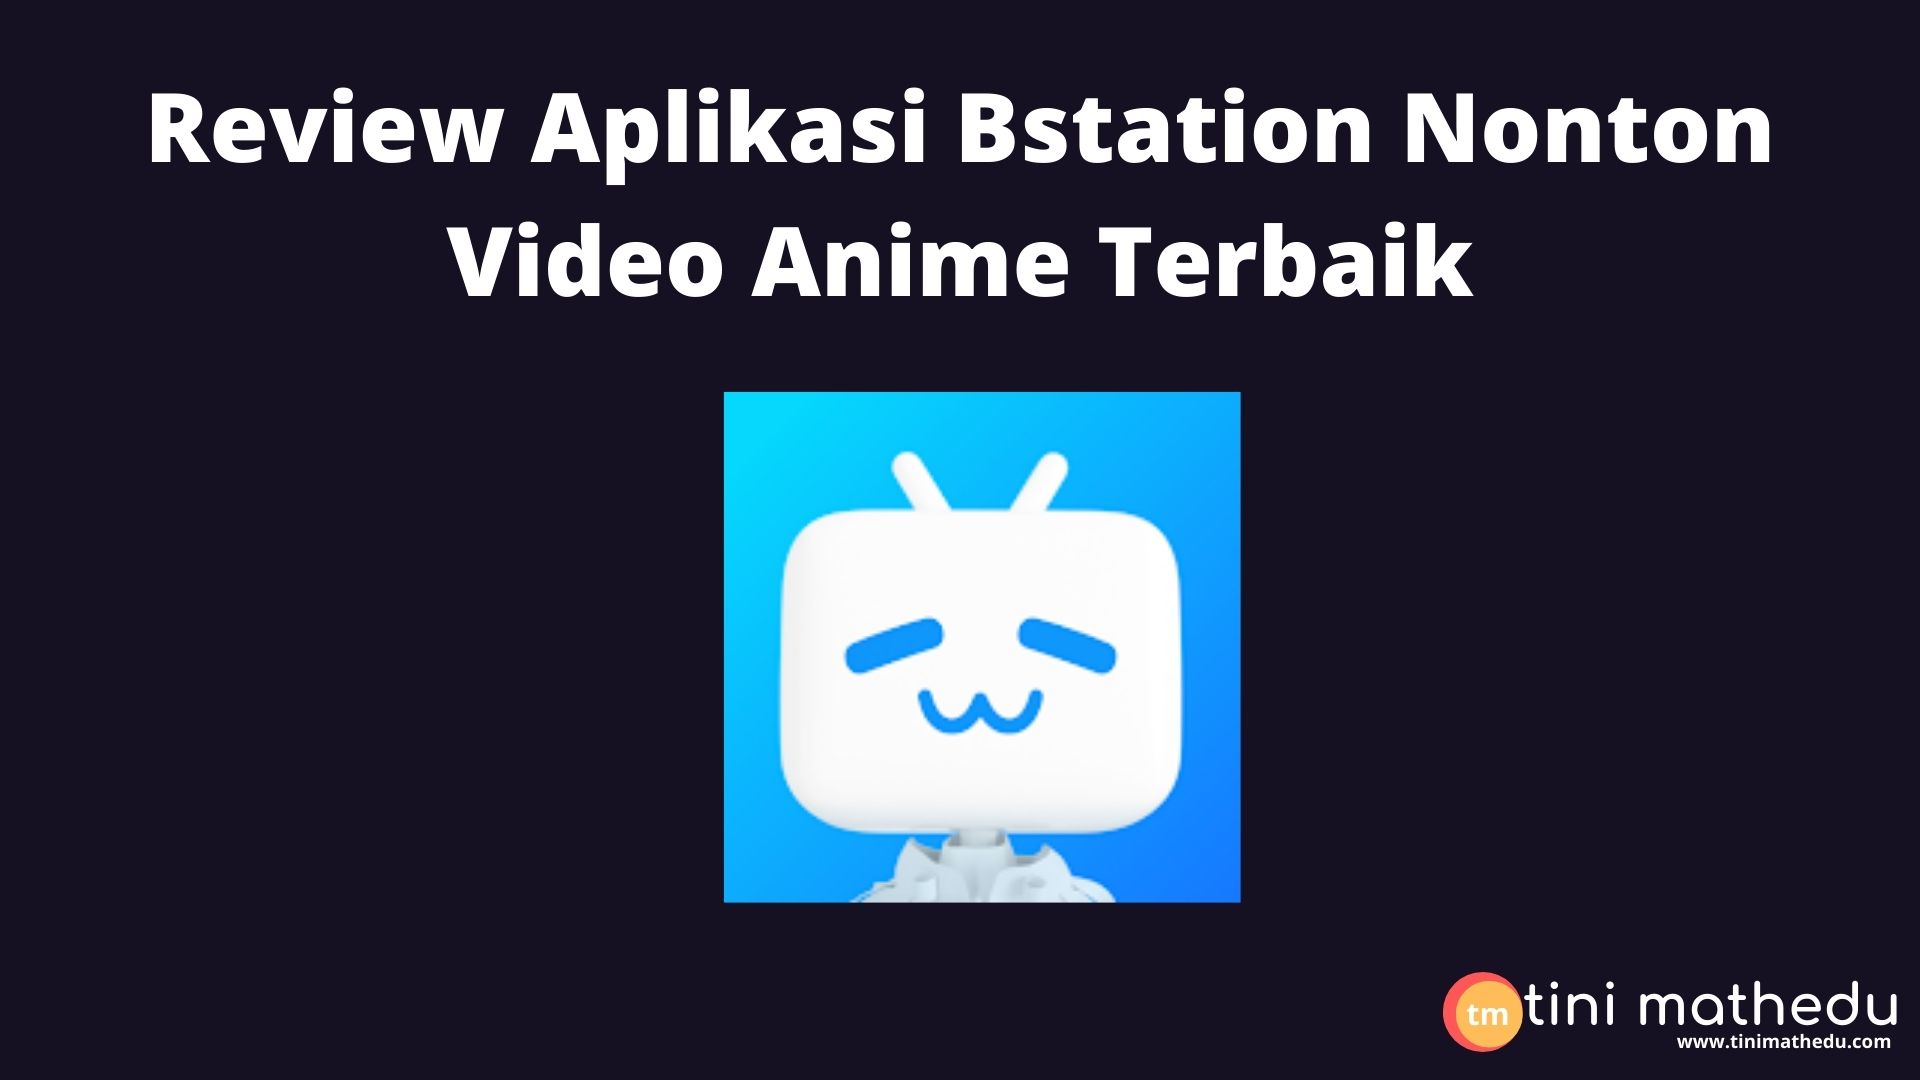 Review Aplikasi Bstation